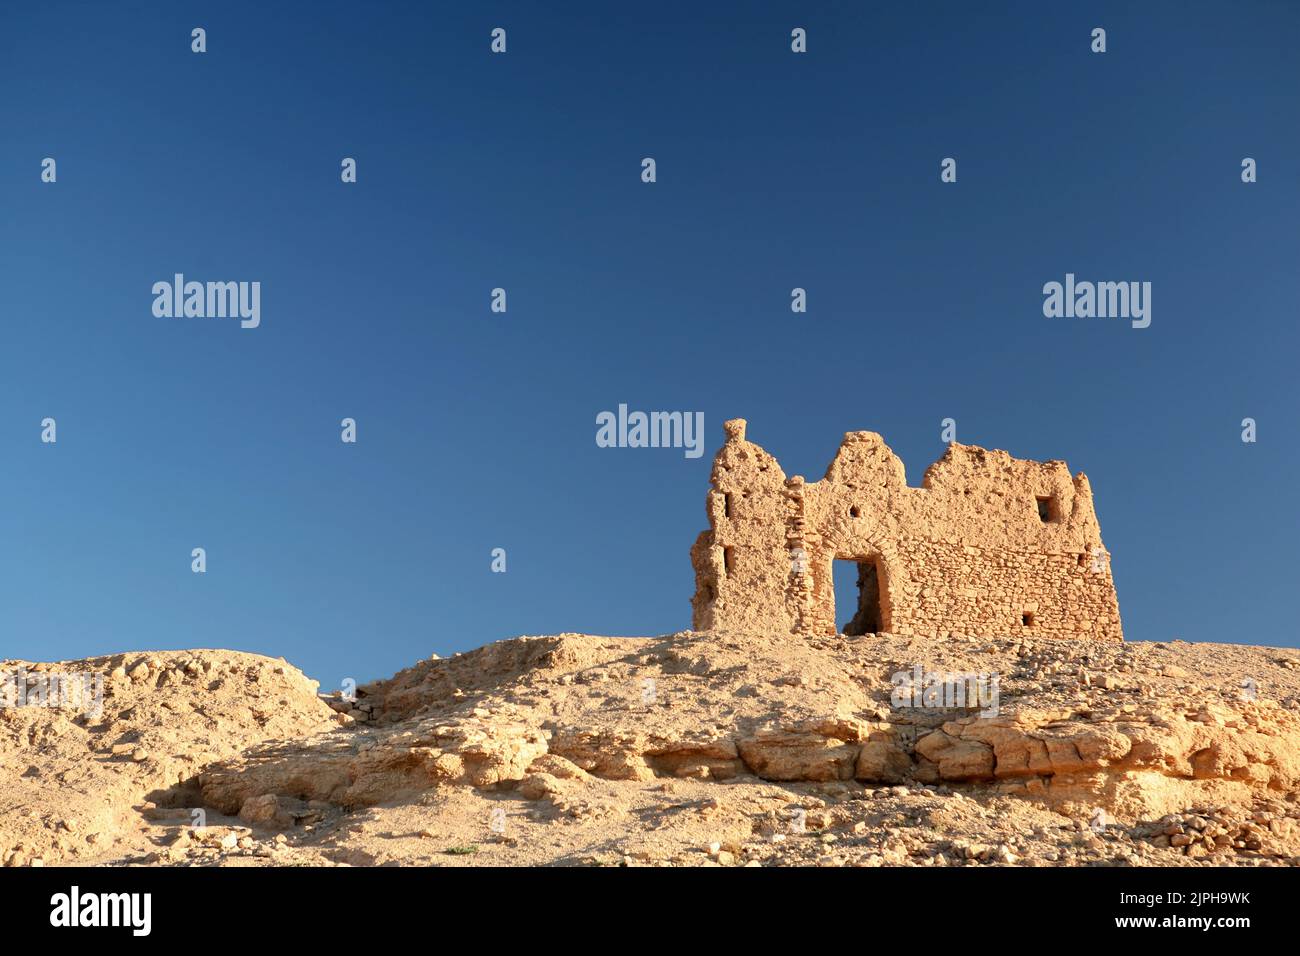 The Granary atop Ait BenHaddou - Morroco Stock Photo